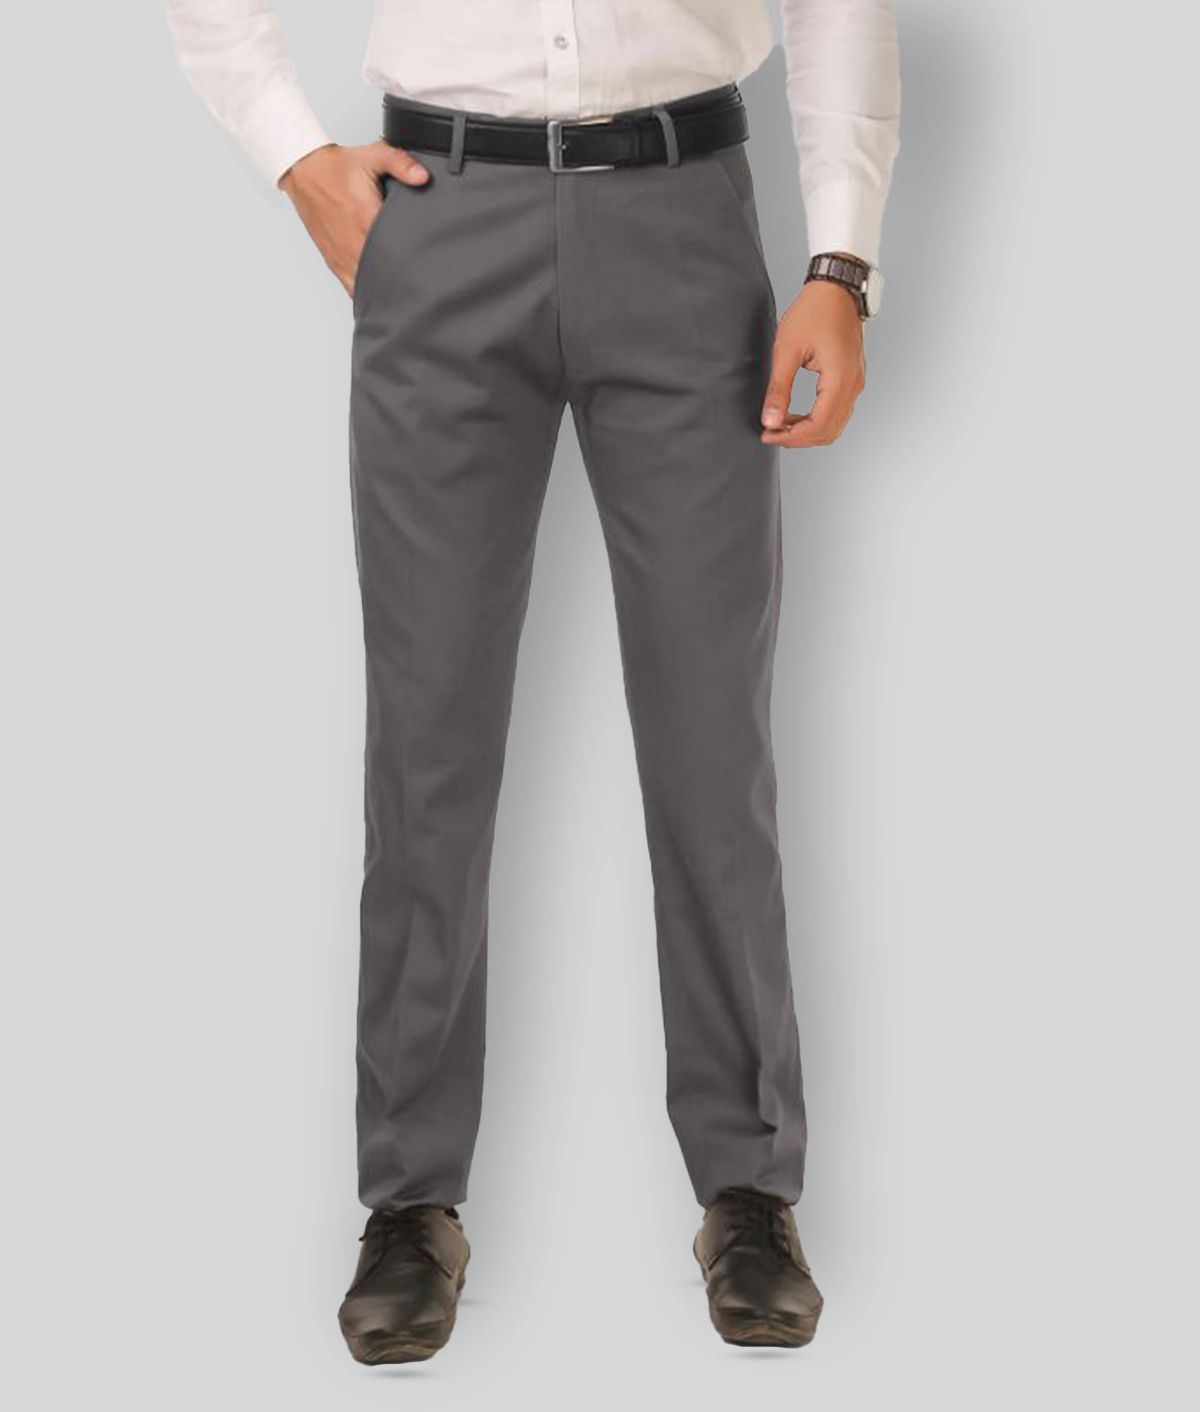     			Haul Chic - Dark Grey Polycotton Slim - Fit Men's Formal Pants ( Pack of 1 )